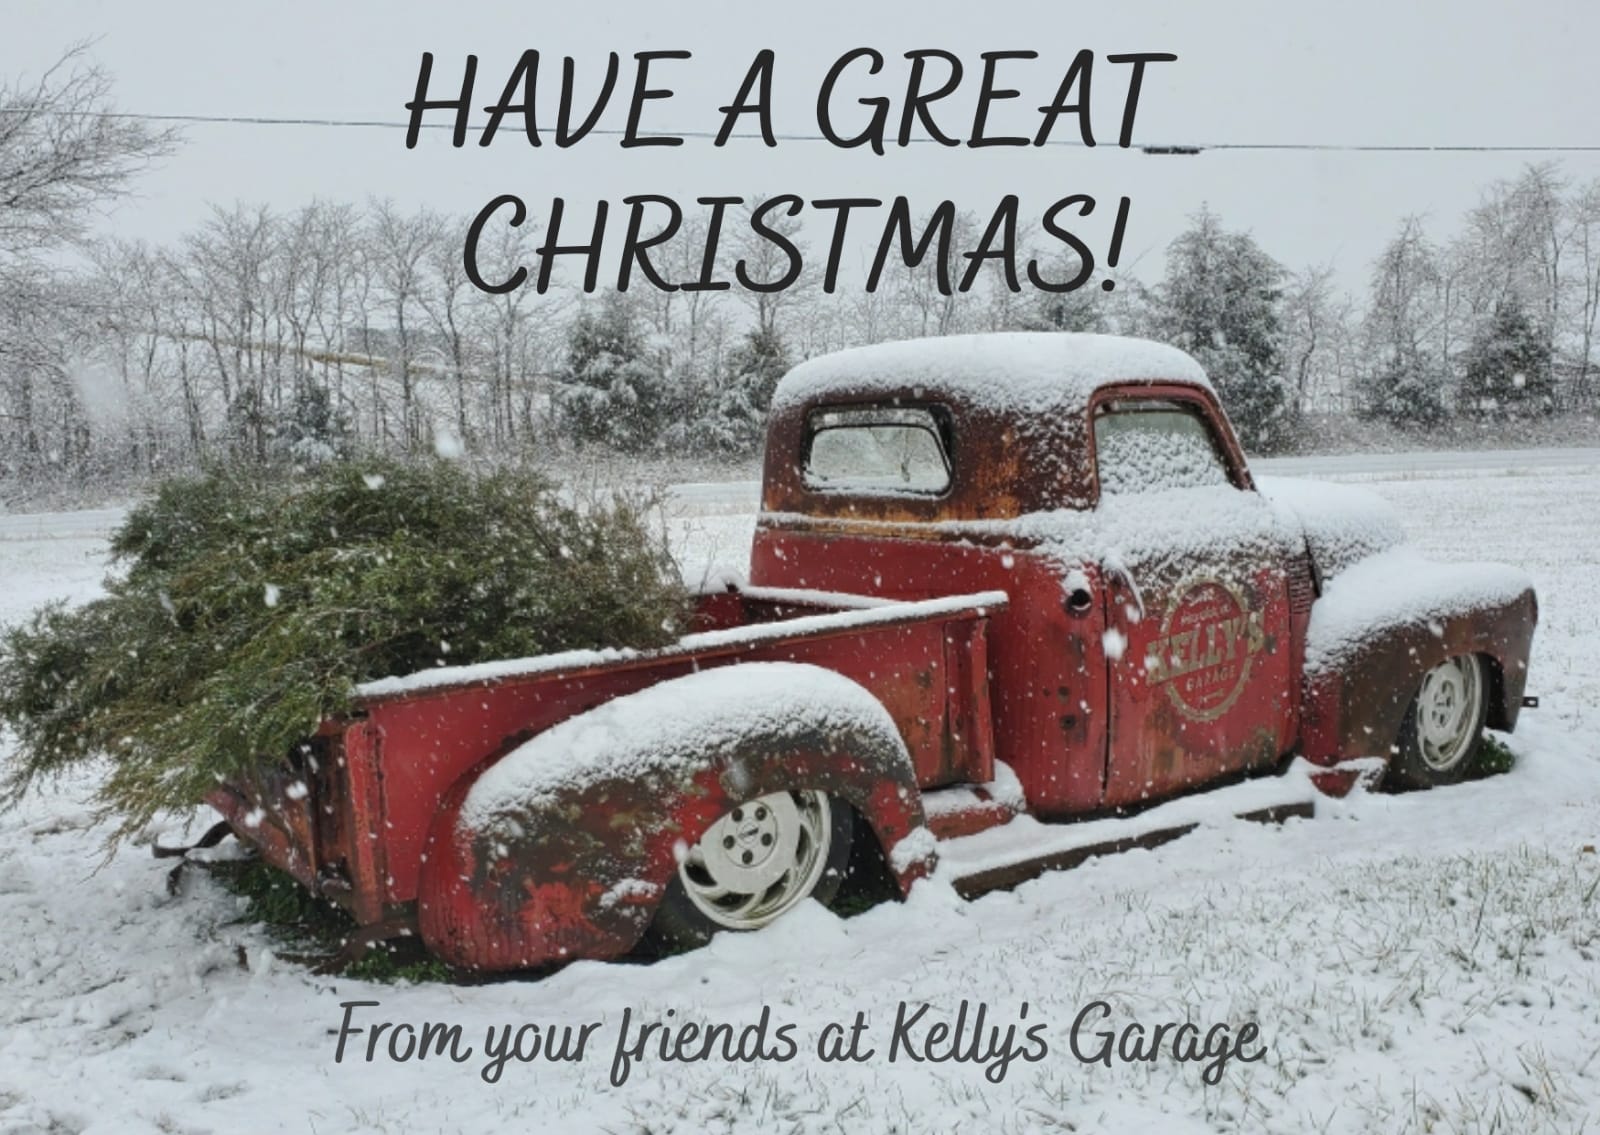 Kelly's Garage 24526 FR 1240, Shell Knob Missouri 65747